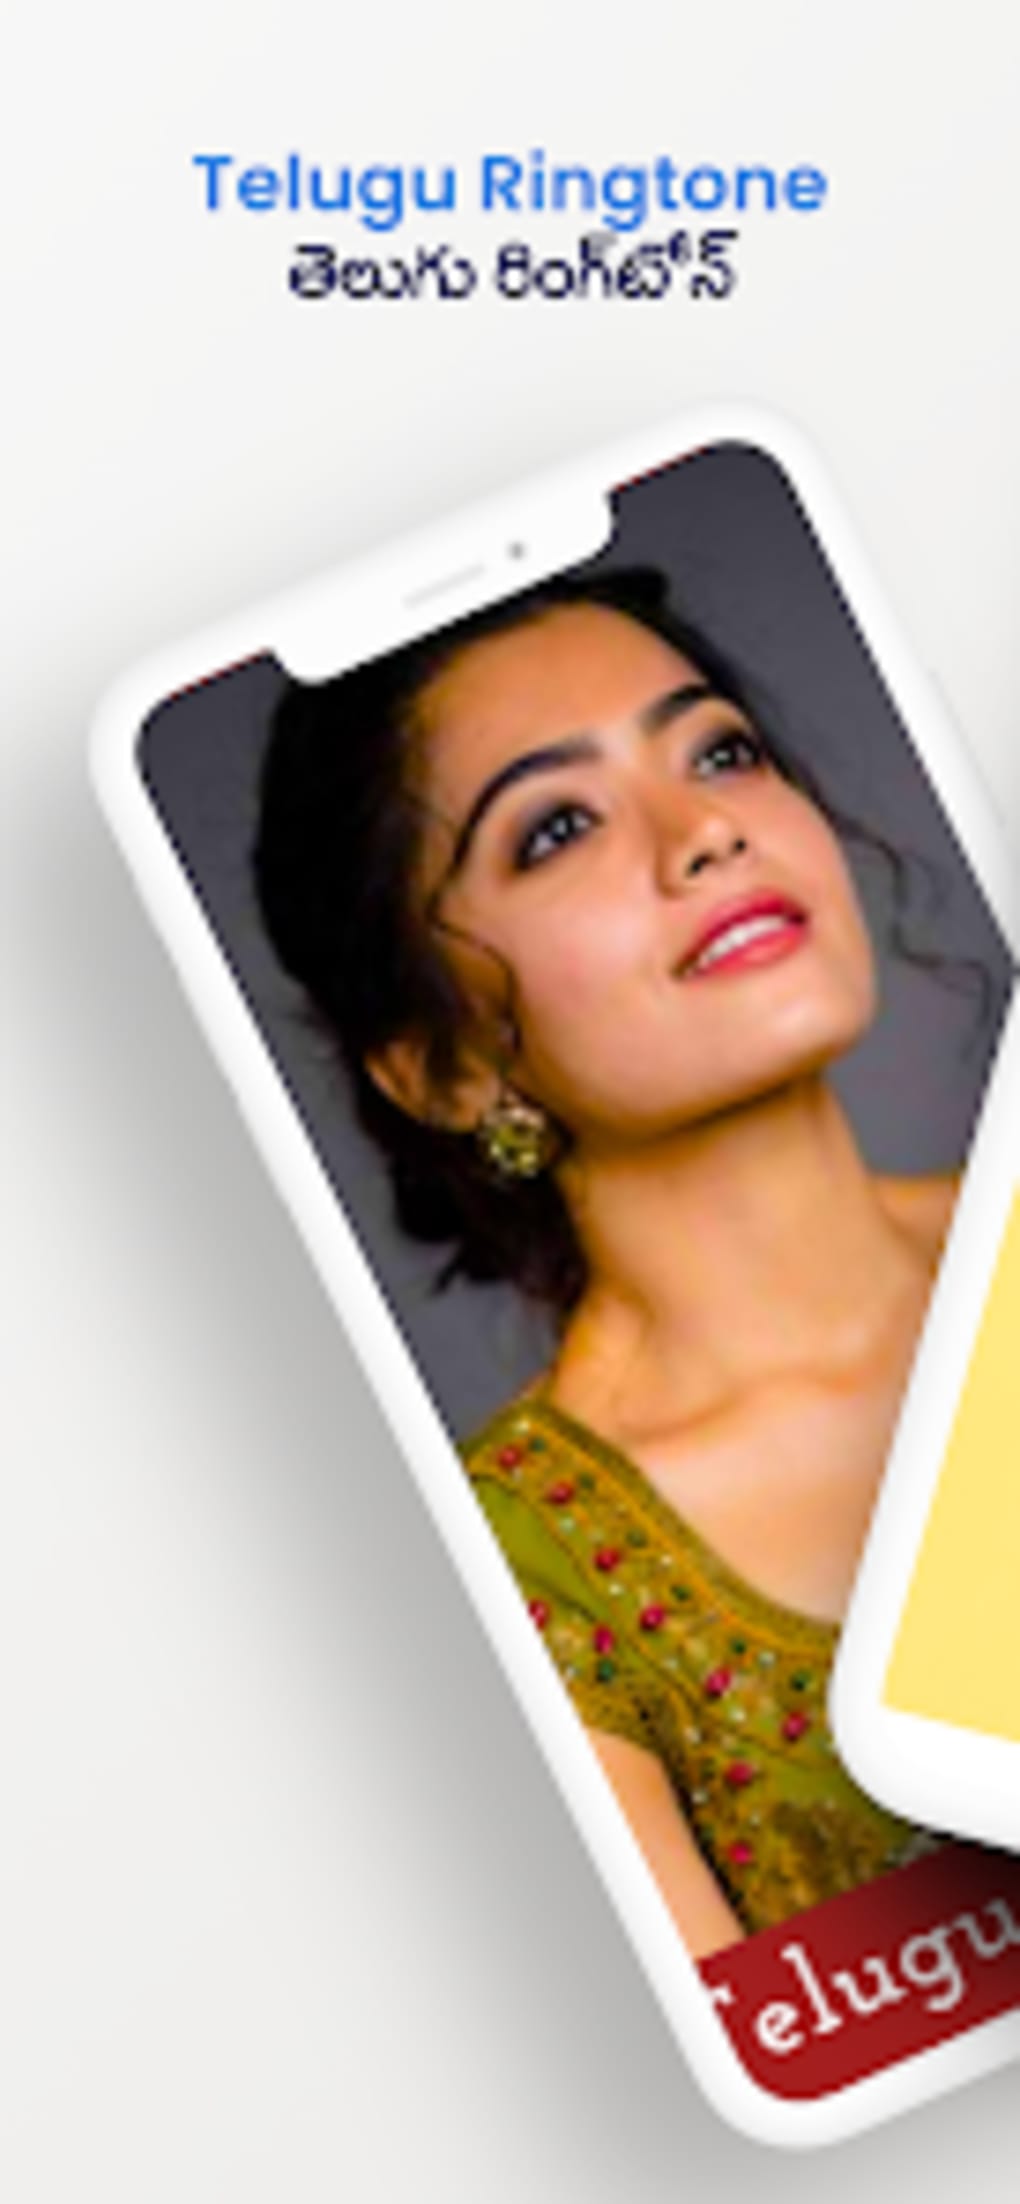 Telugu Ringtones New APK (Android App) - Free Download